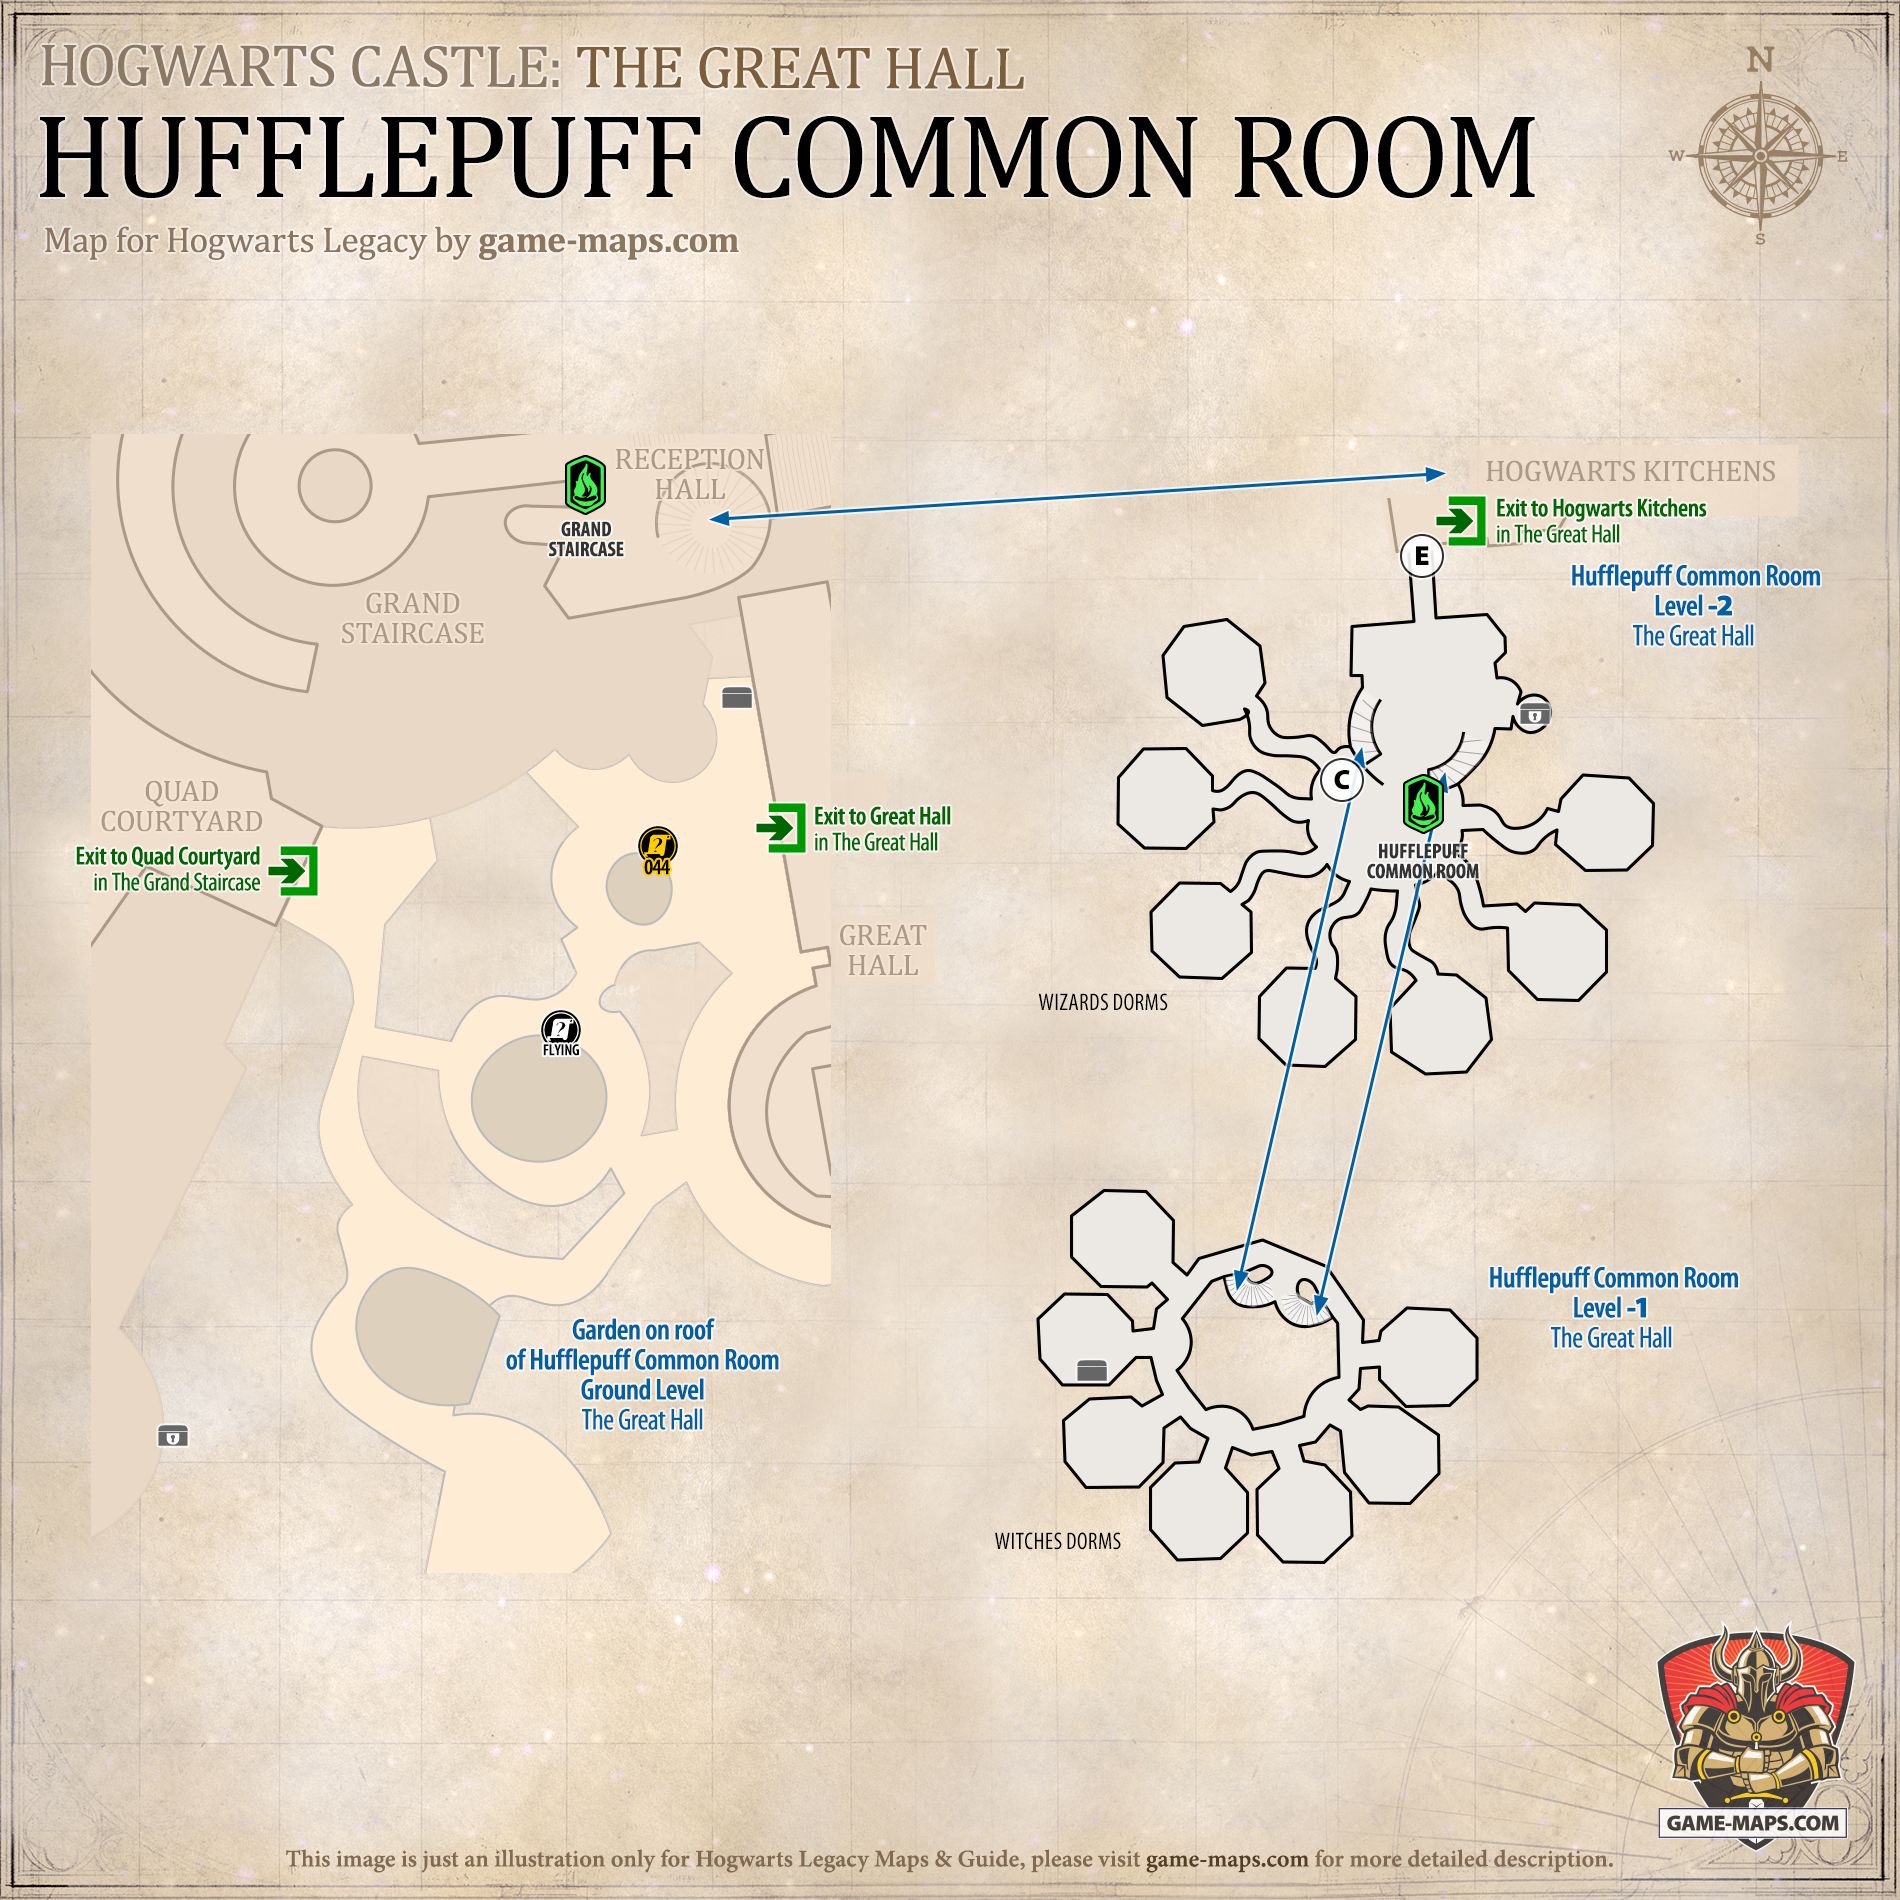 Hufflepuff Common Room Hogwarts Legacy